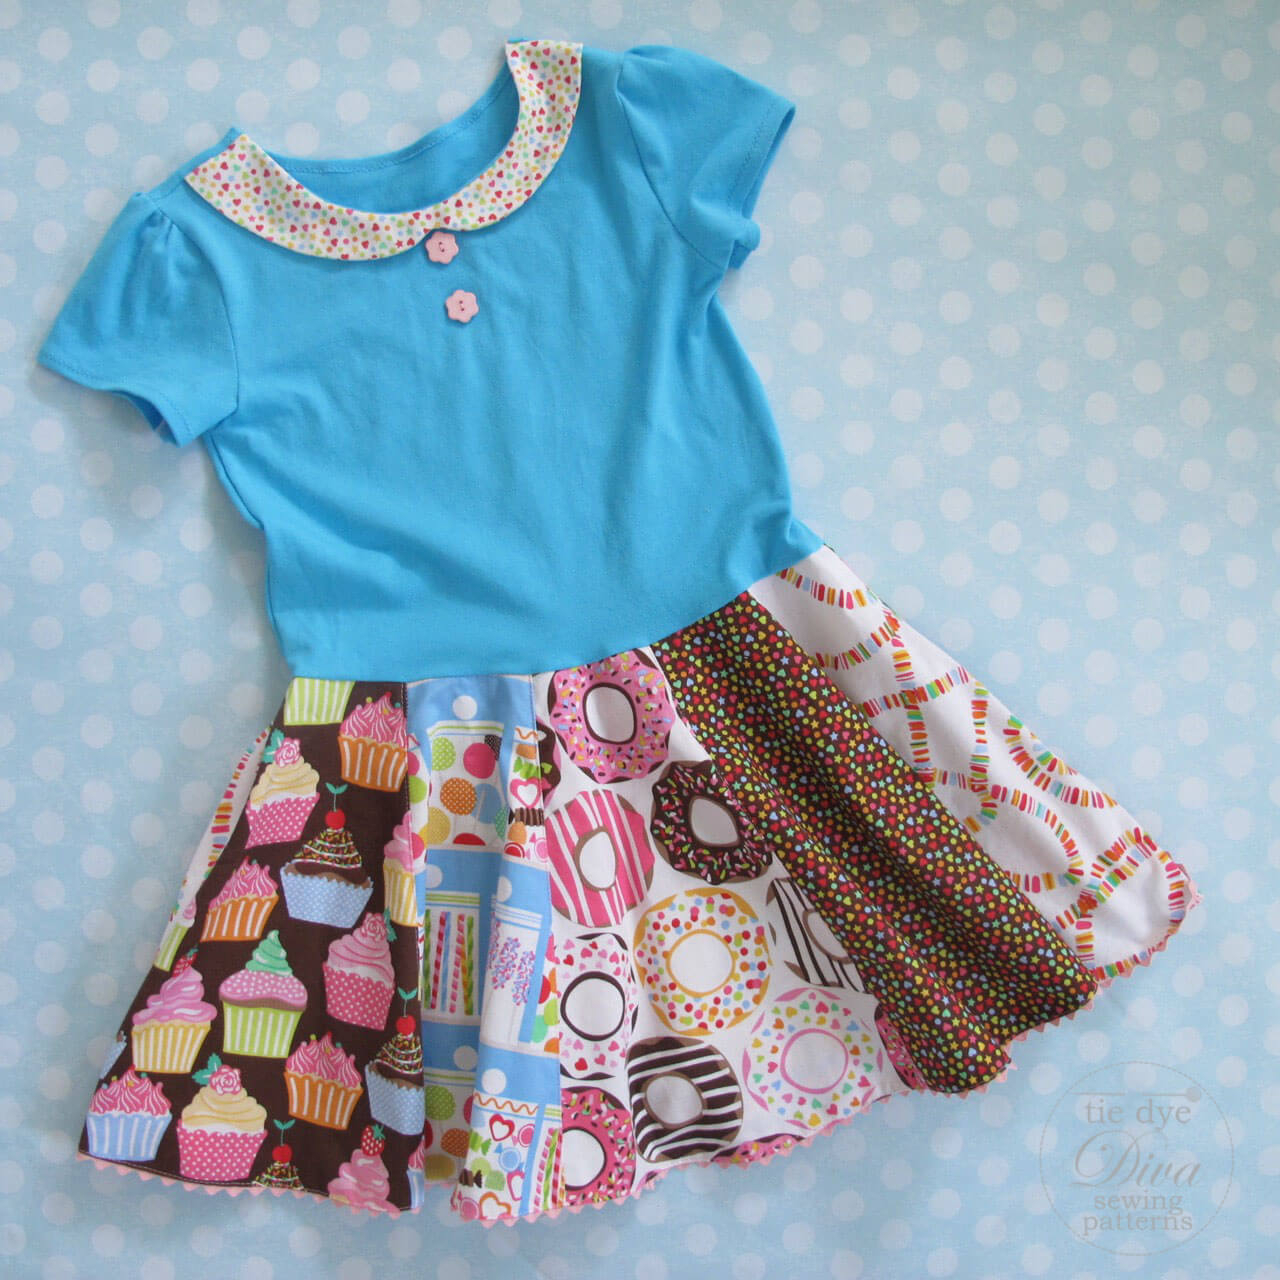 Knit Circle Pattern Garnet Dress Top And Skirt Pattern Knit And Woven Fabric Circle Skirt Girls 1 10 Years